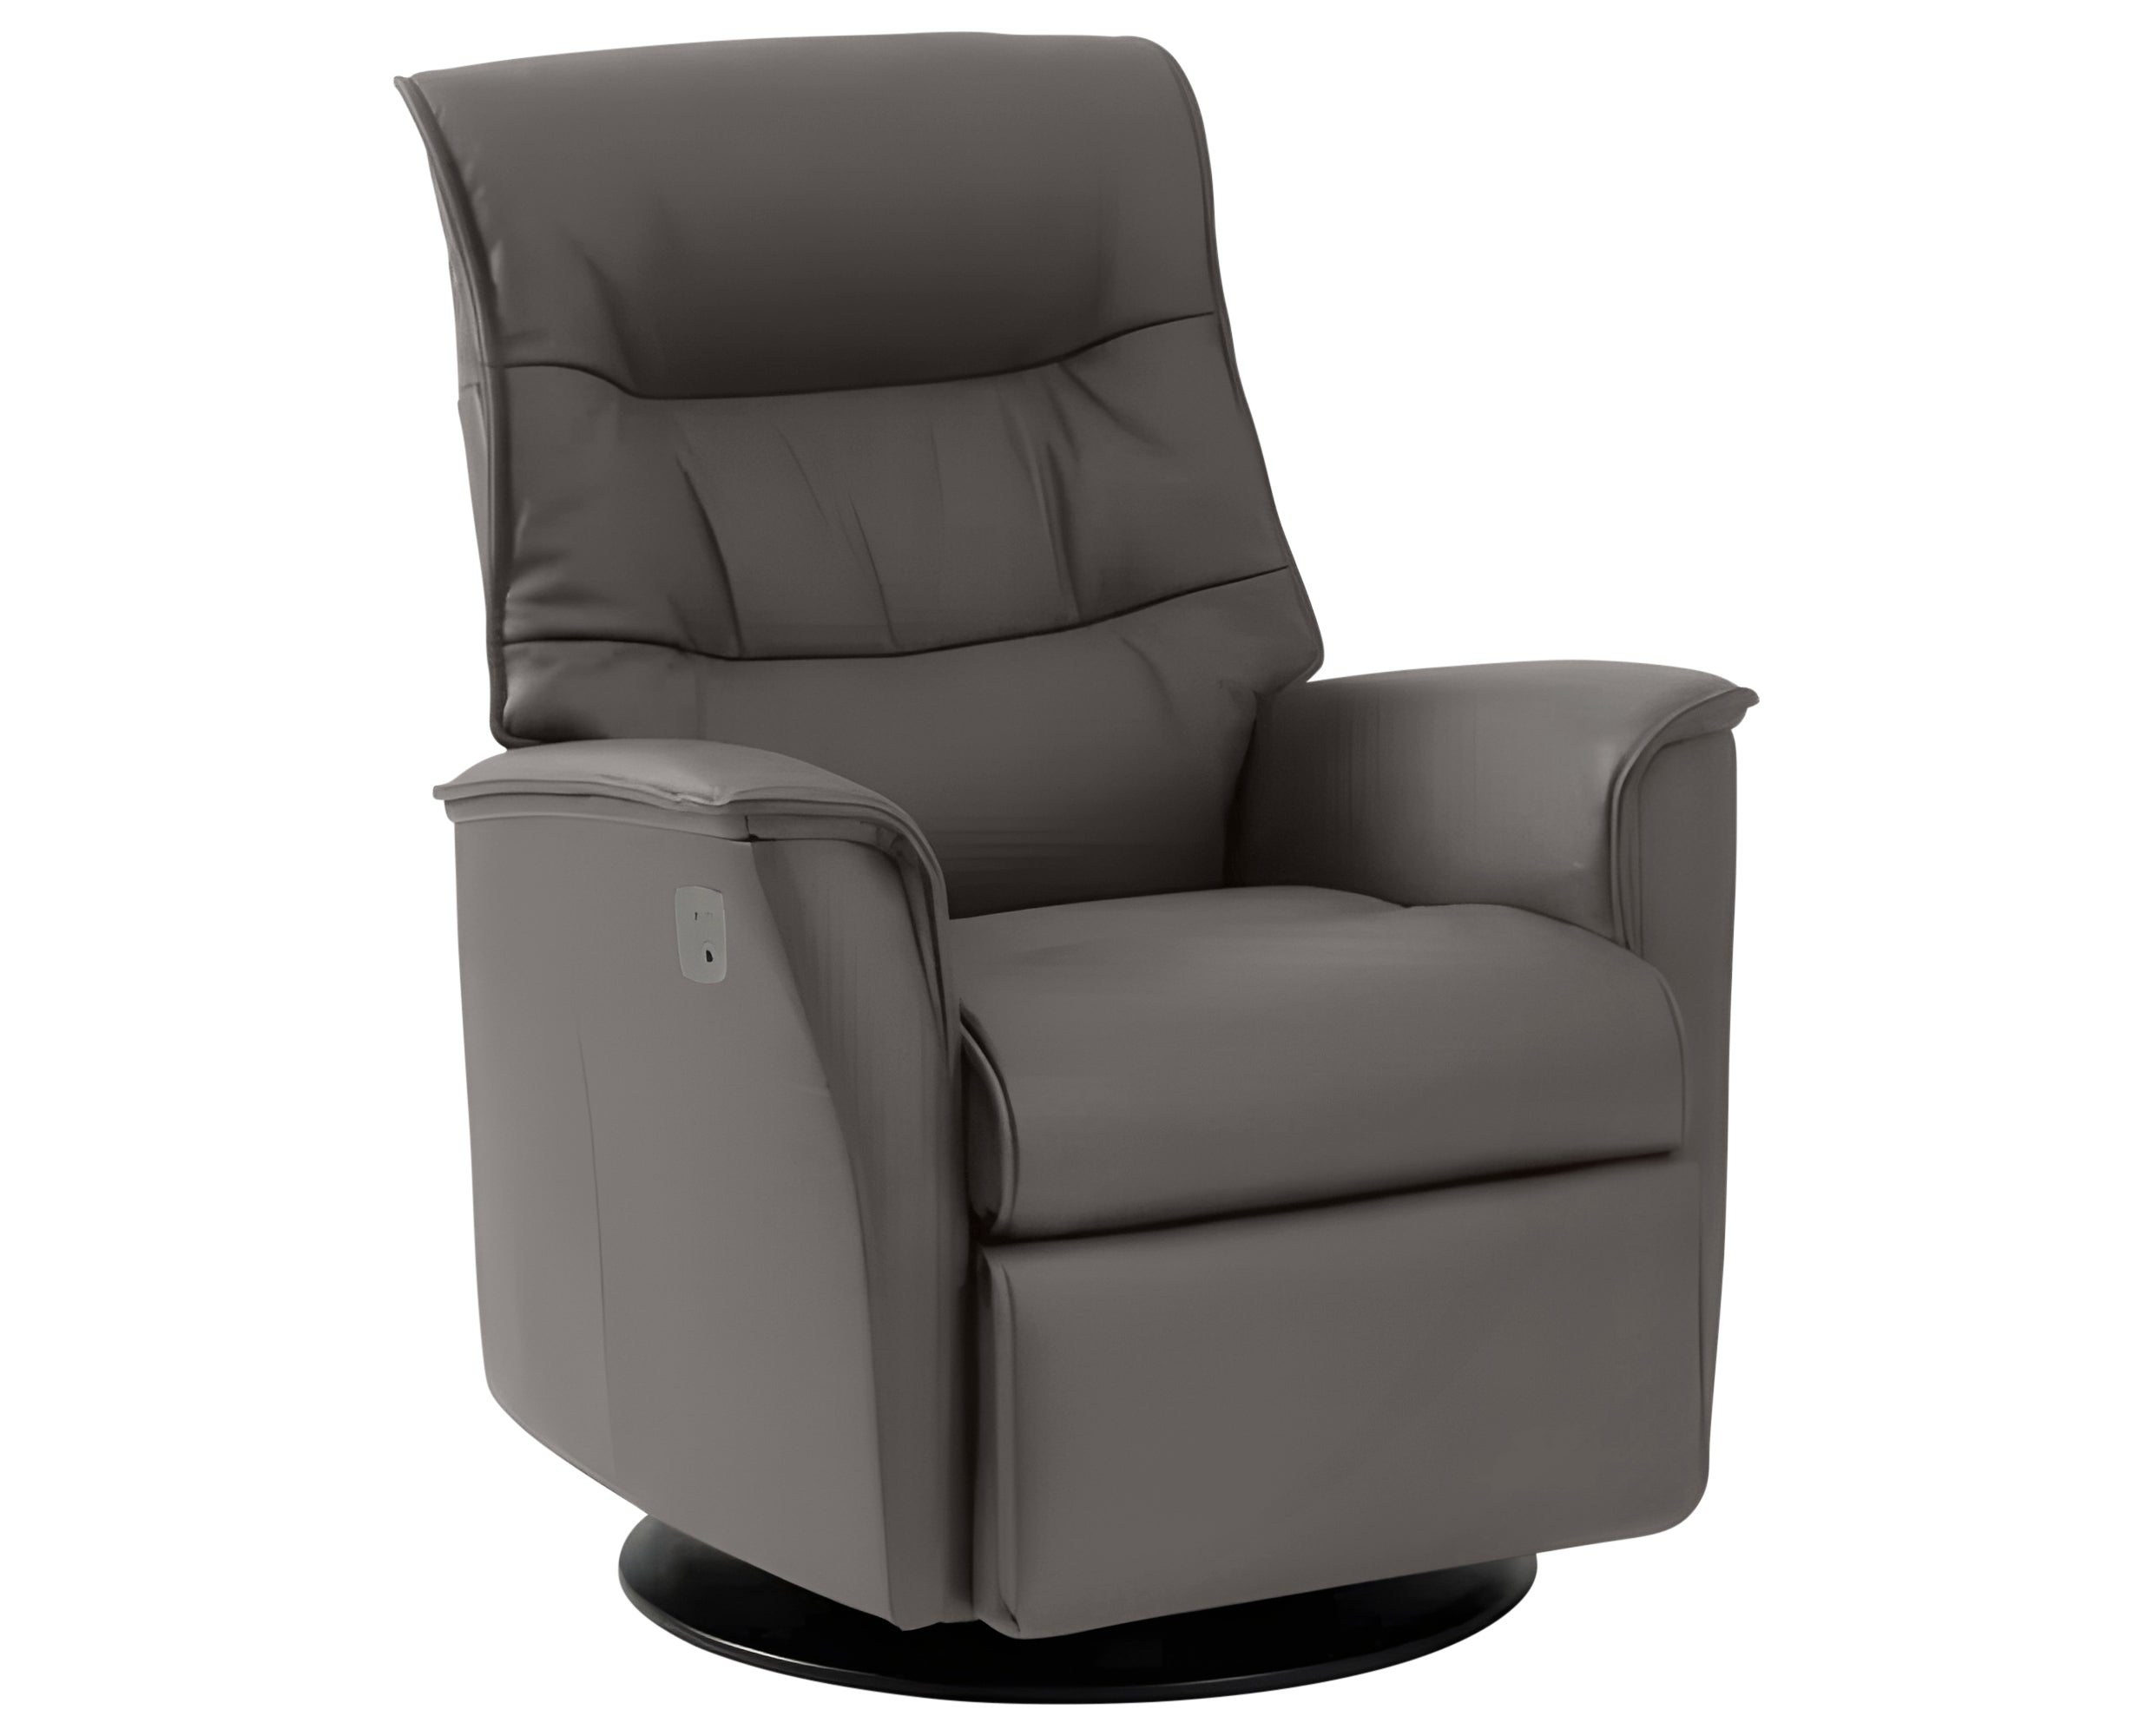 Trend Leather Graphite L | Norwegian Comfort Paramount Recliner - Promo | Valley Ridge Furniture